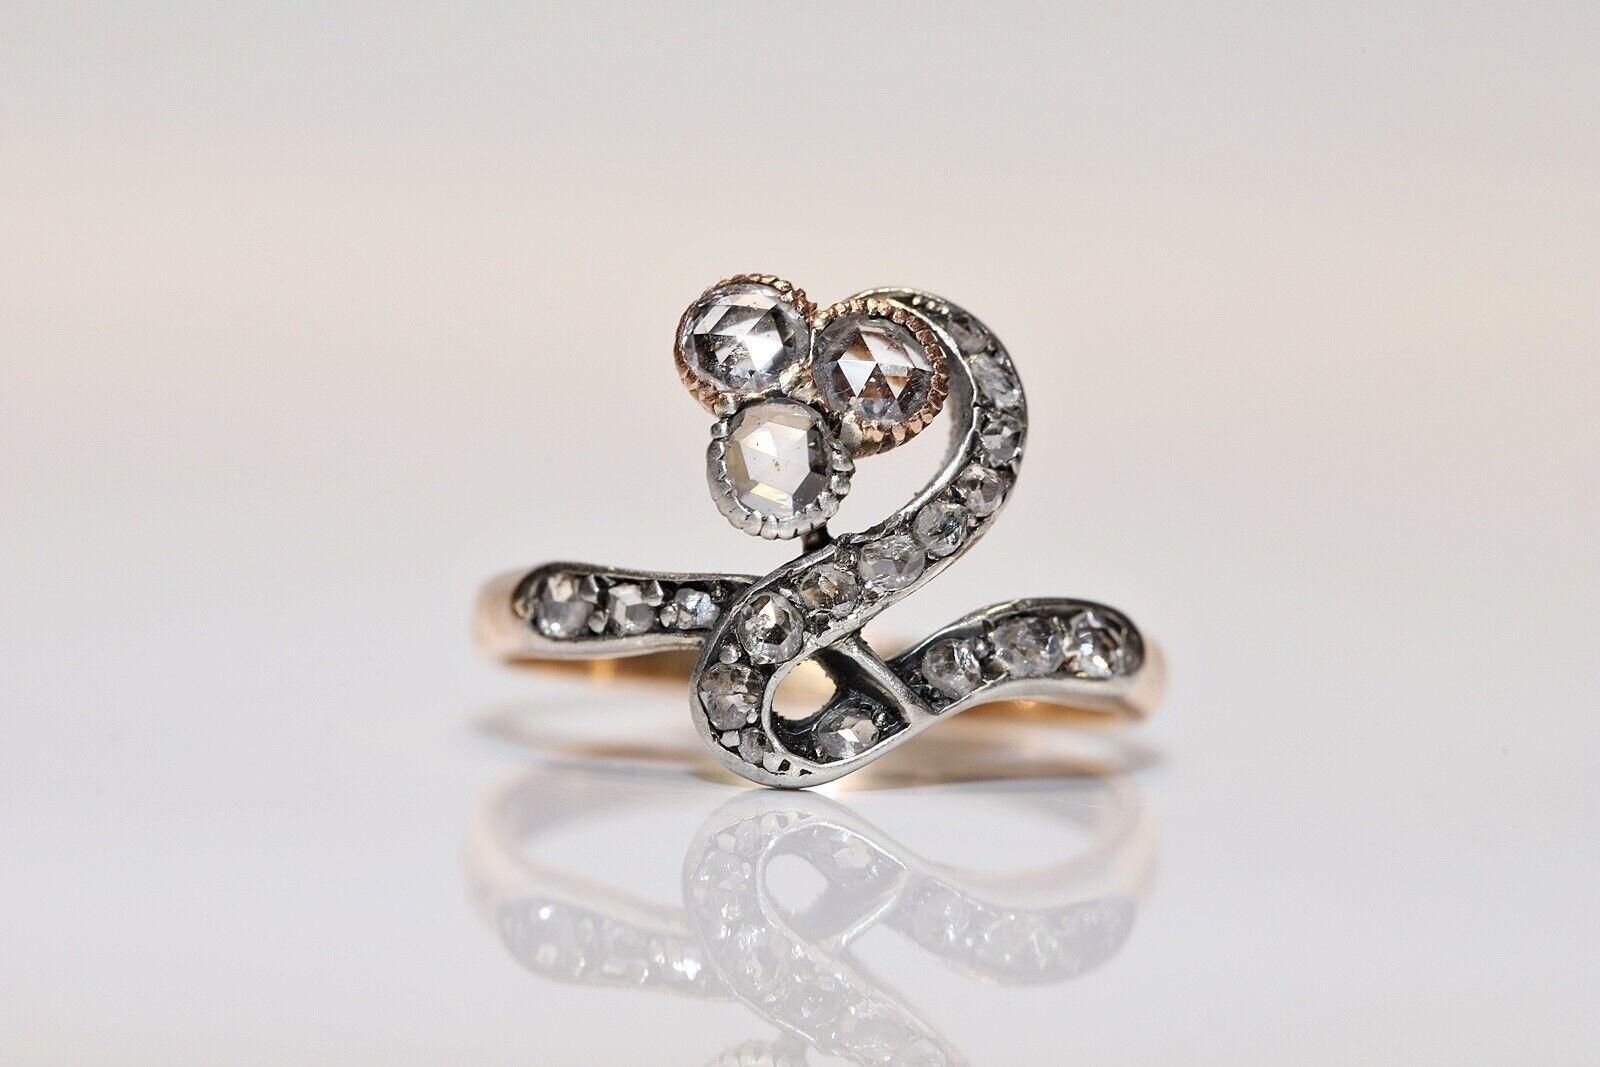 Antique Circa 1910s 18k Gold Top Silver Art Nouveau Natural Diamond Ring  For Sale 6